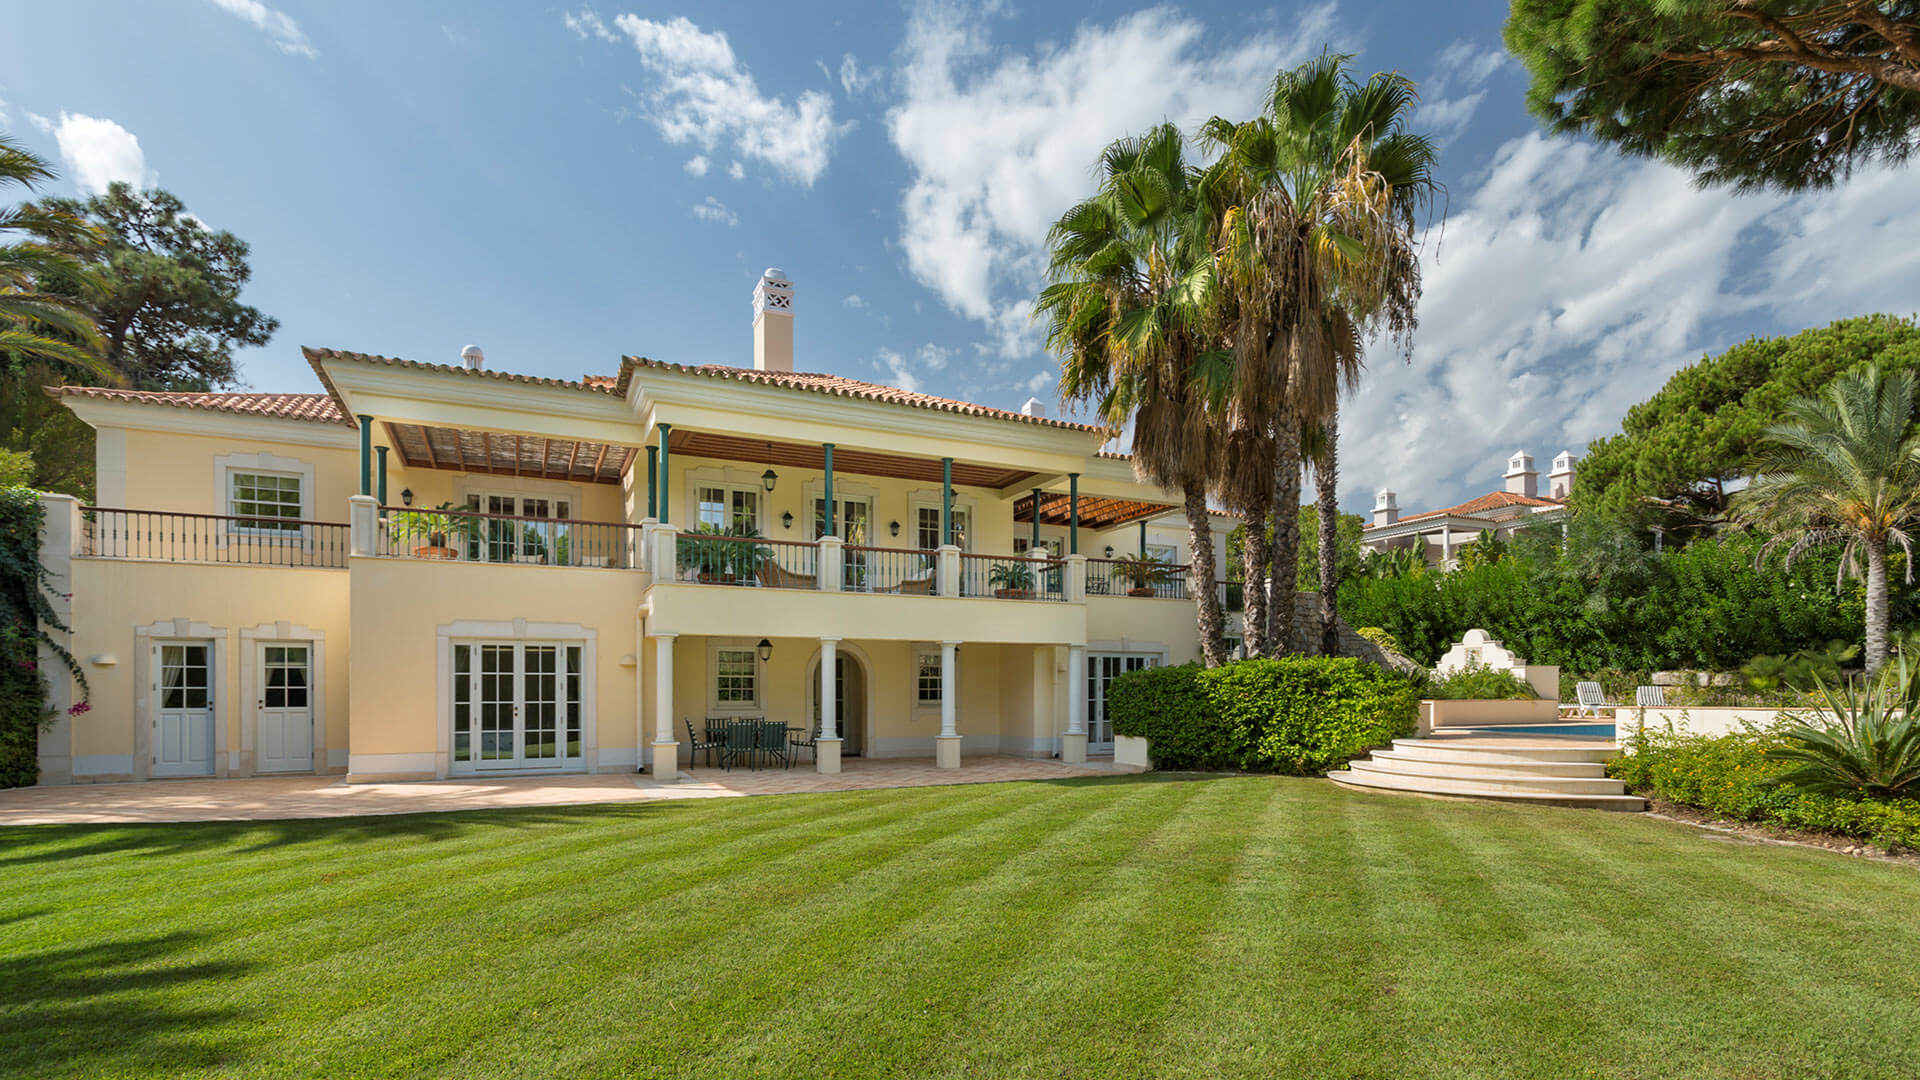 Villa Villa Noccila, Location à Algarve